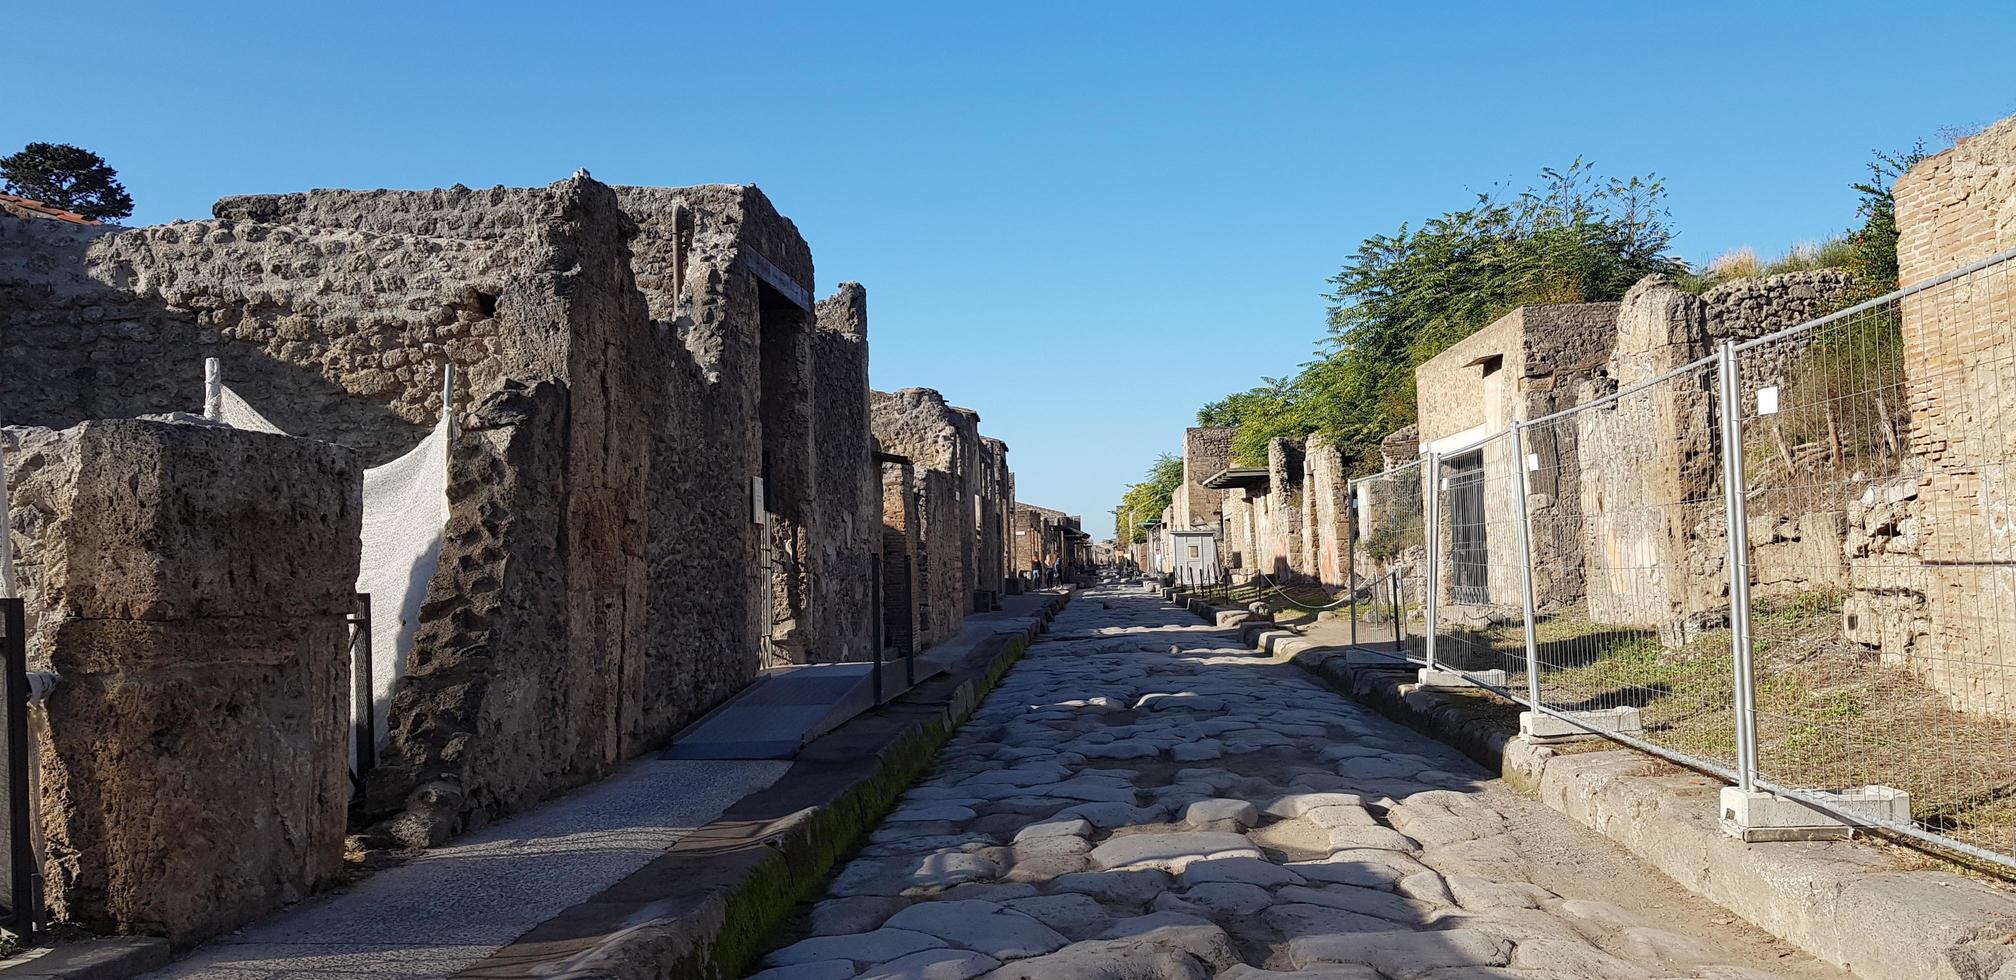 Ruinen von Pompeji in Italien foto